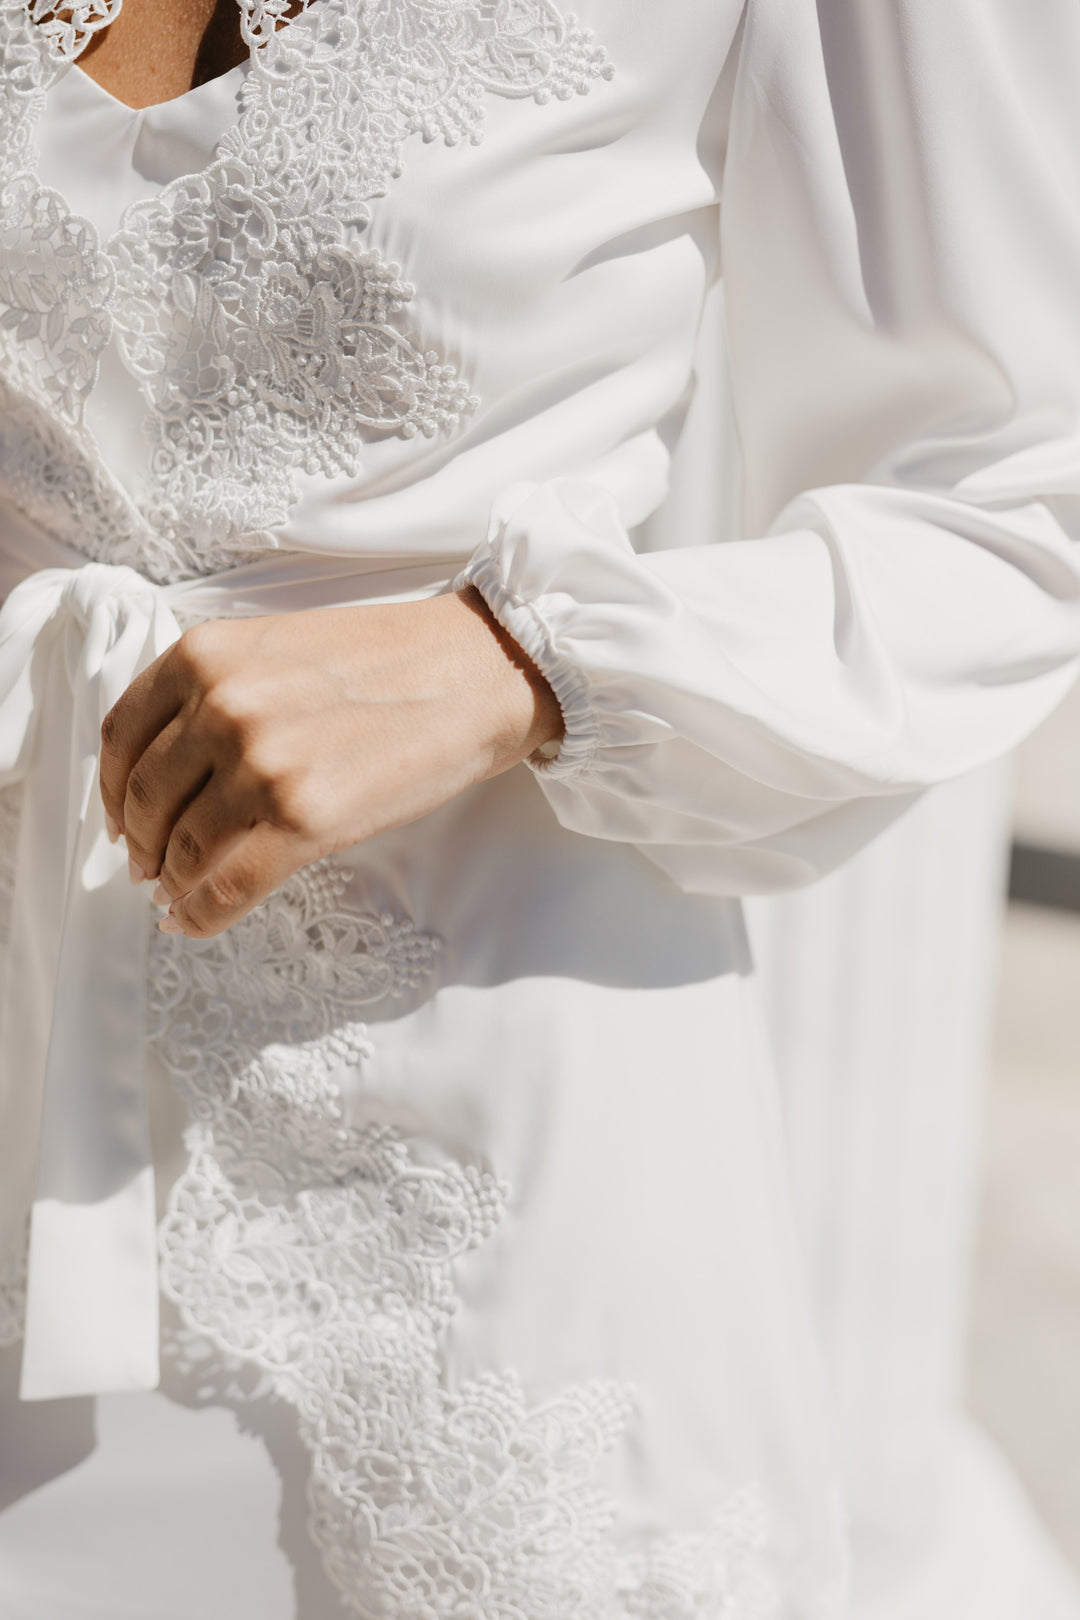 Lottie Lace Trim Bridal Robe - Includes Slip